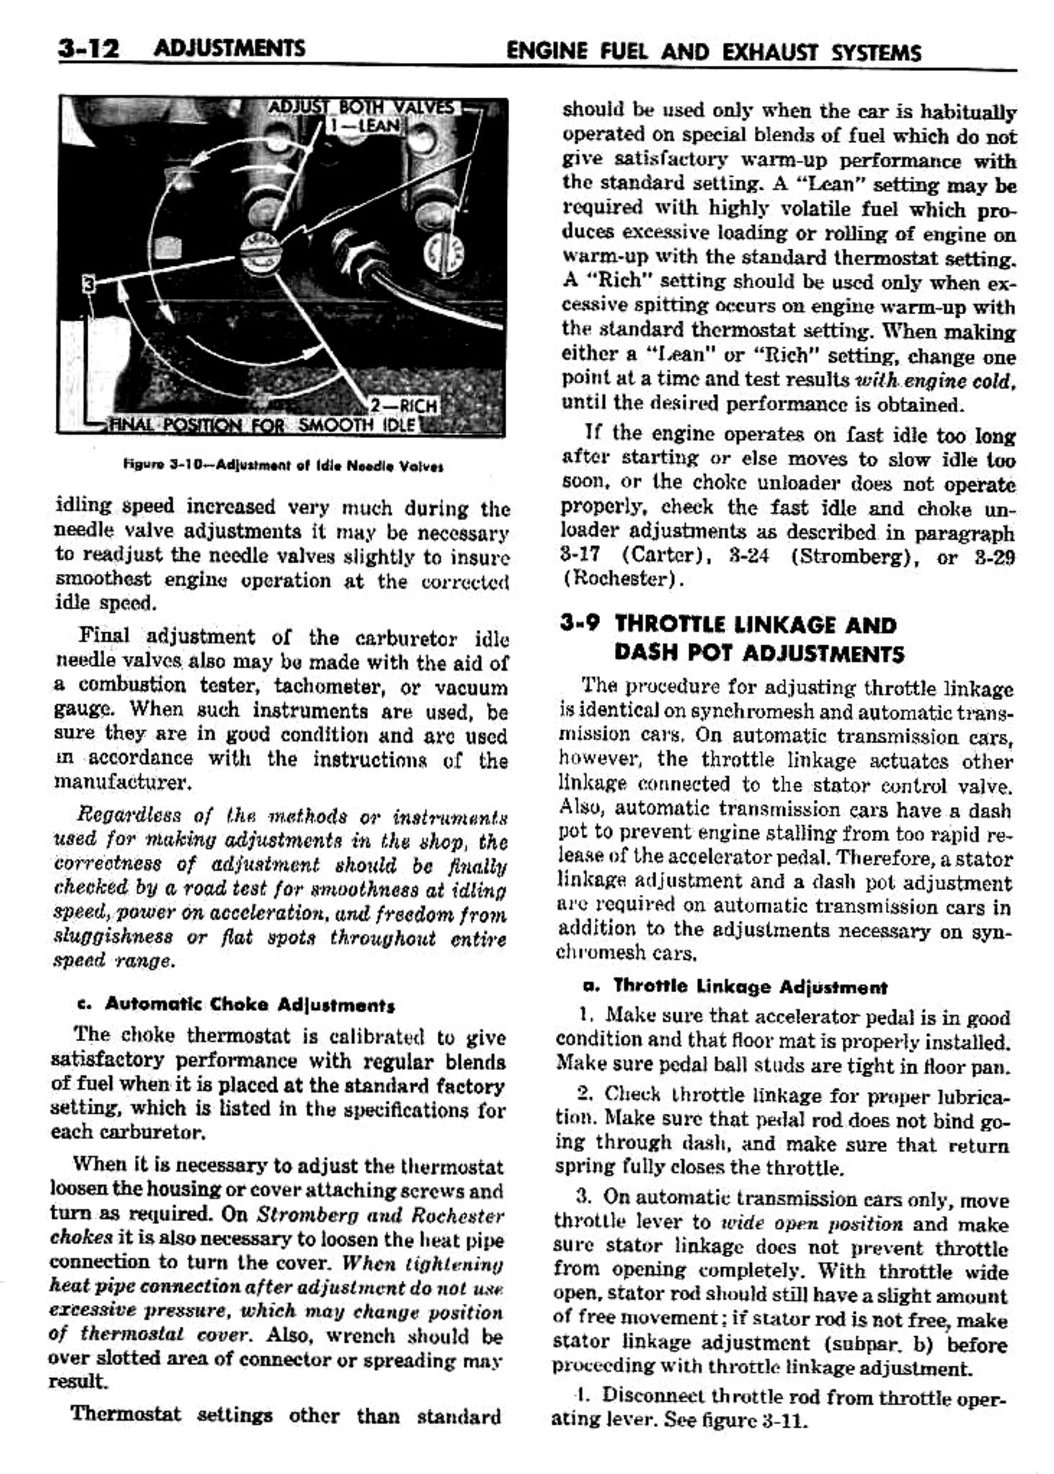 n_04 1959 Buick Shop Manual - Engine Fuel & Exhaust-012-012.jpg